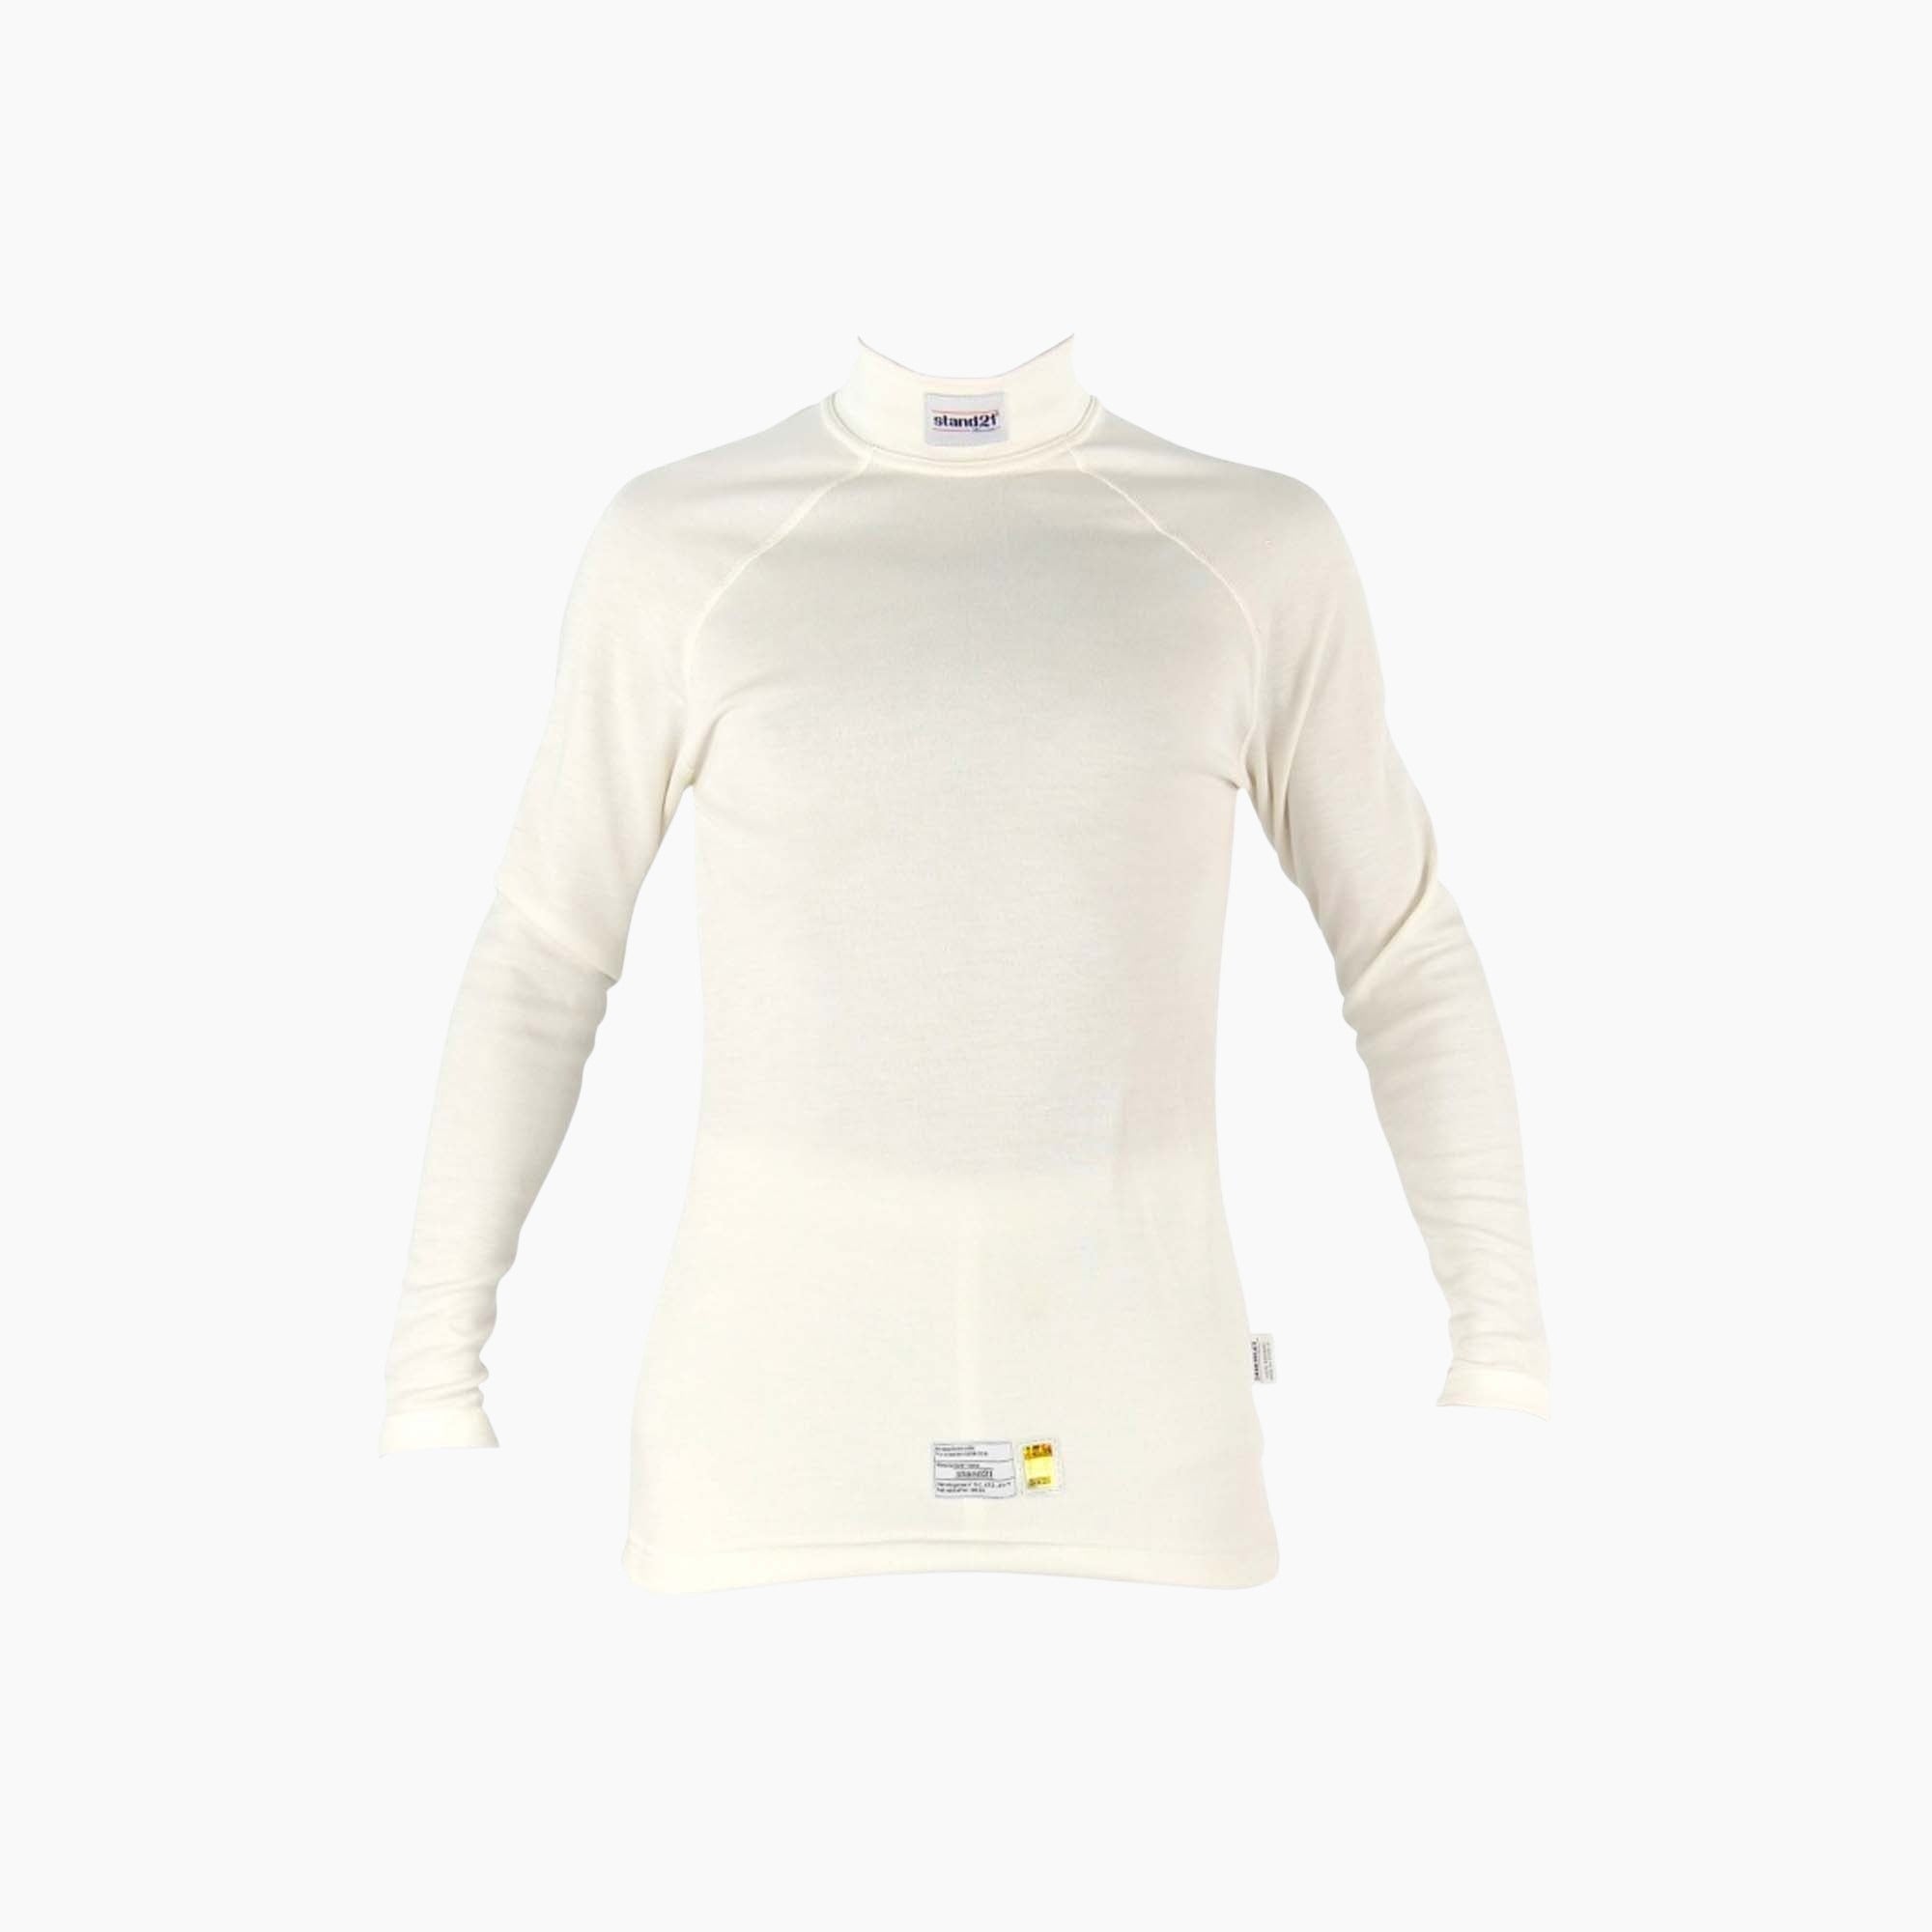 Stand 21 | Underwear Long Sleeve Top White-Racing Underwear-STAND 21-gpx-store